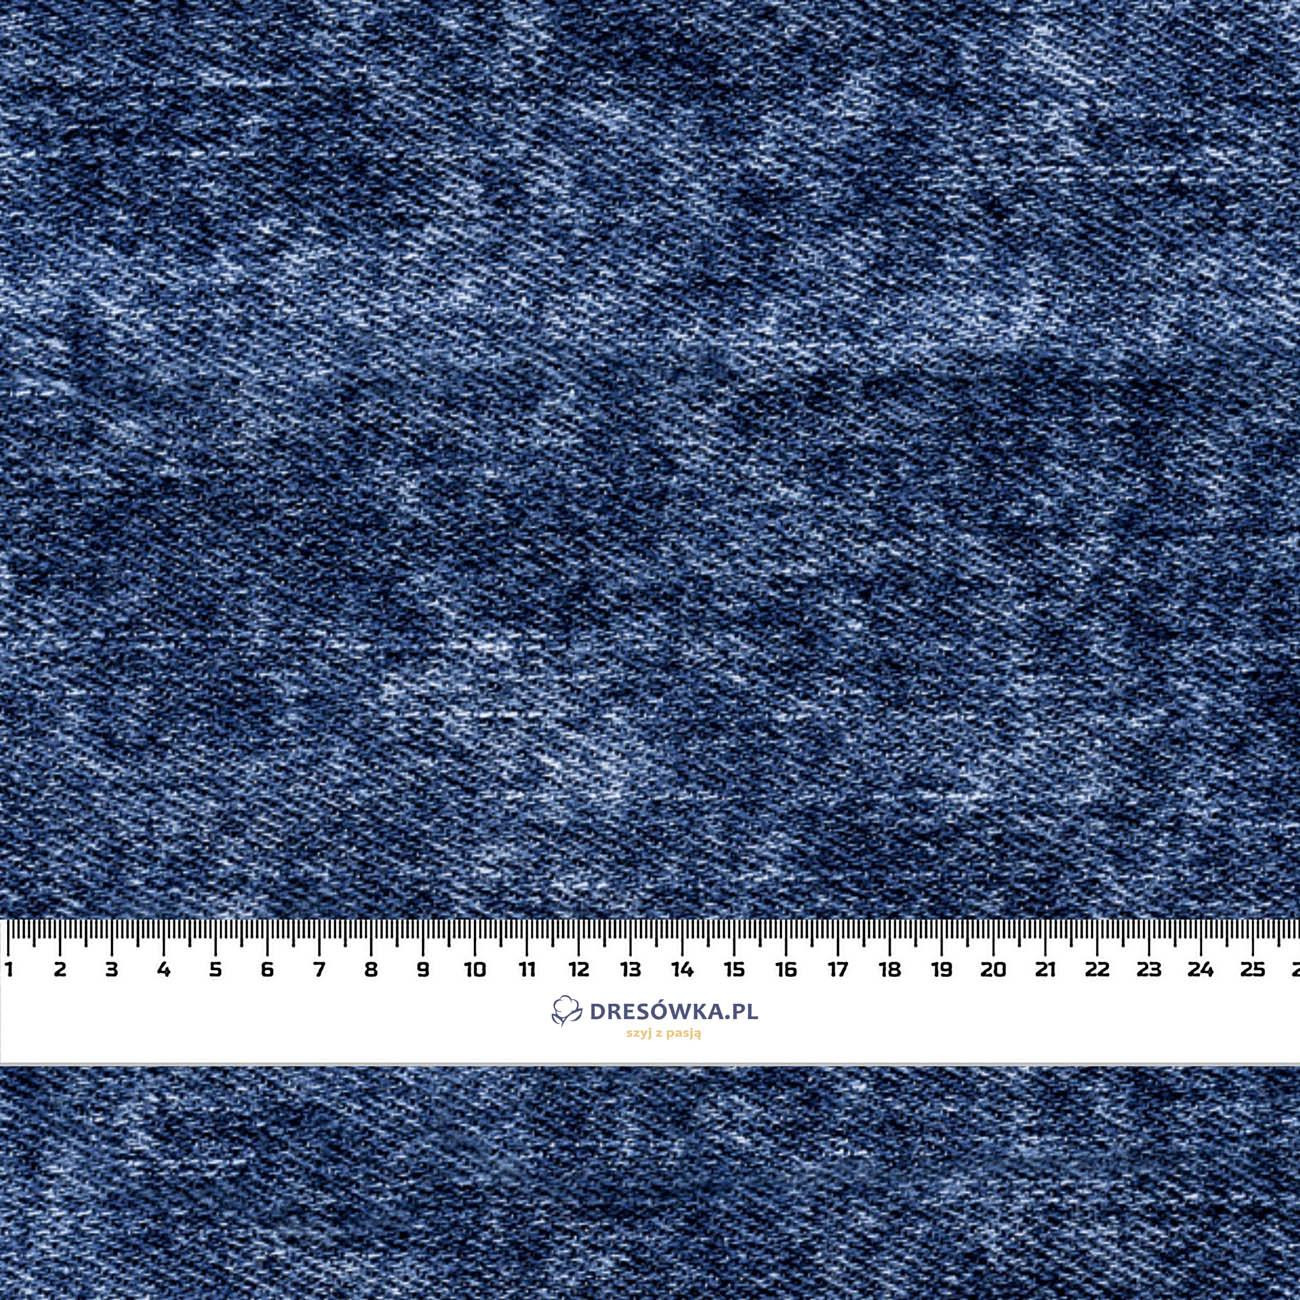 VINTAGE LOOK JEANS (dark blue) - light brushed knitwear